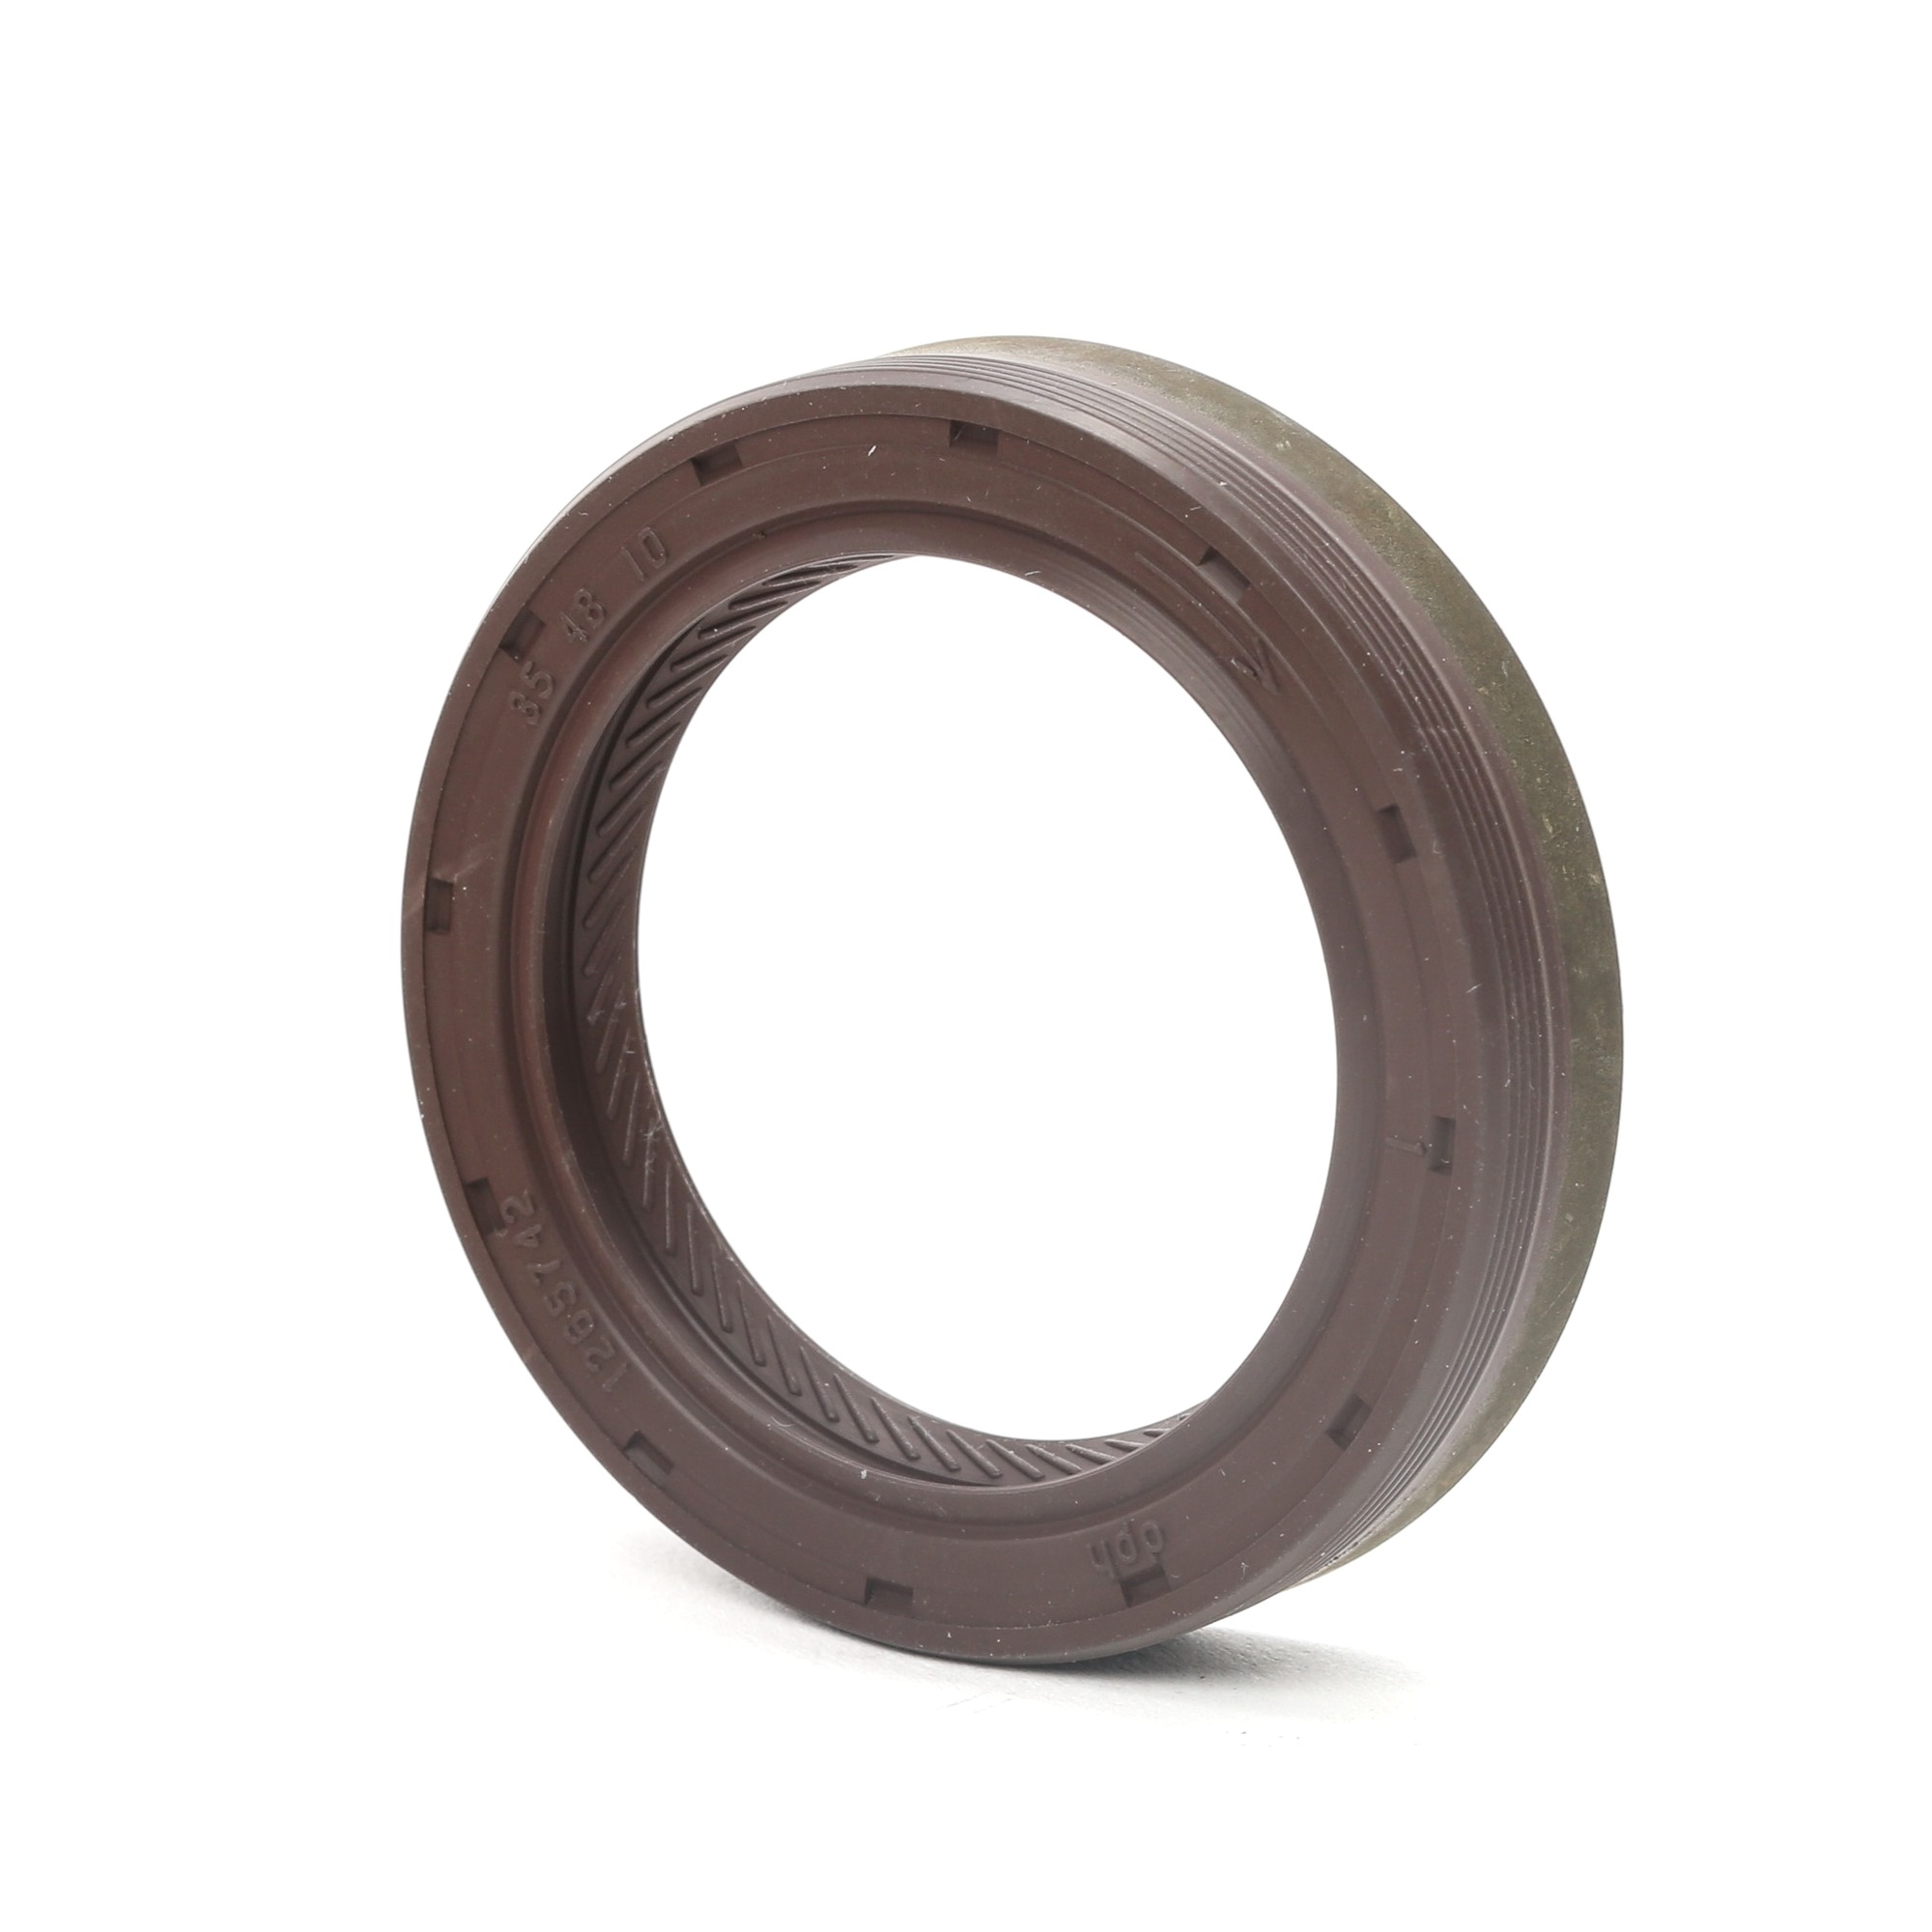 V10-3263 VAICO Crankshaft oil seal SUZUKI Q+, original equipment manufacturer quality, frontal sided, FPM (fluoride rubber)